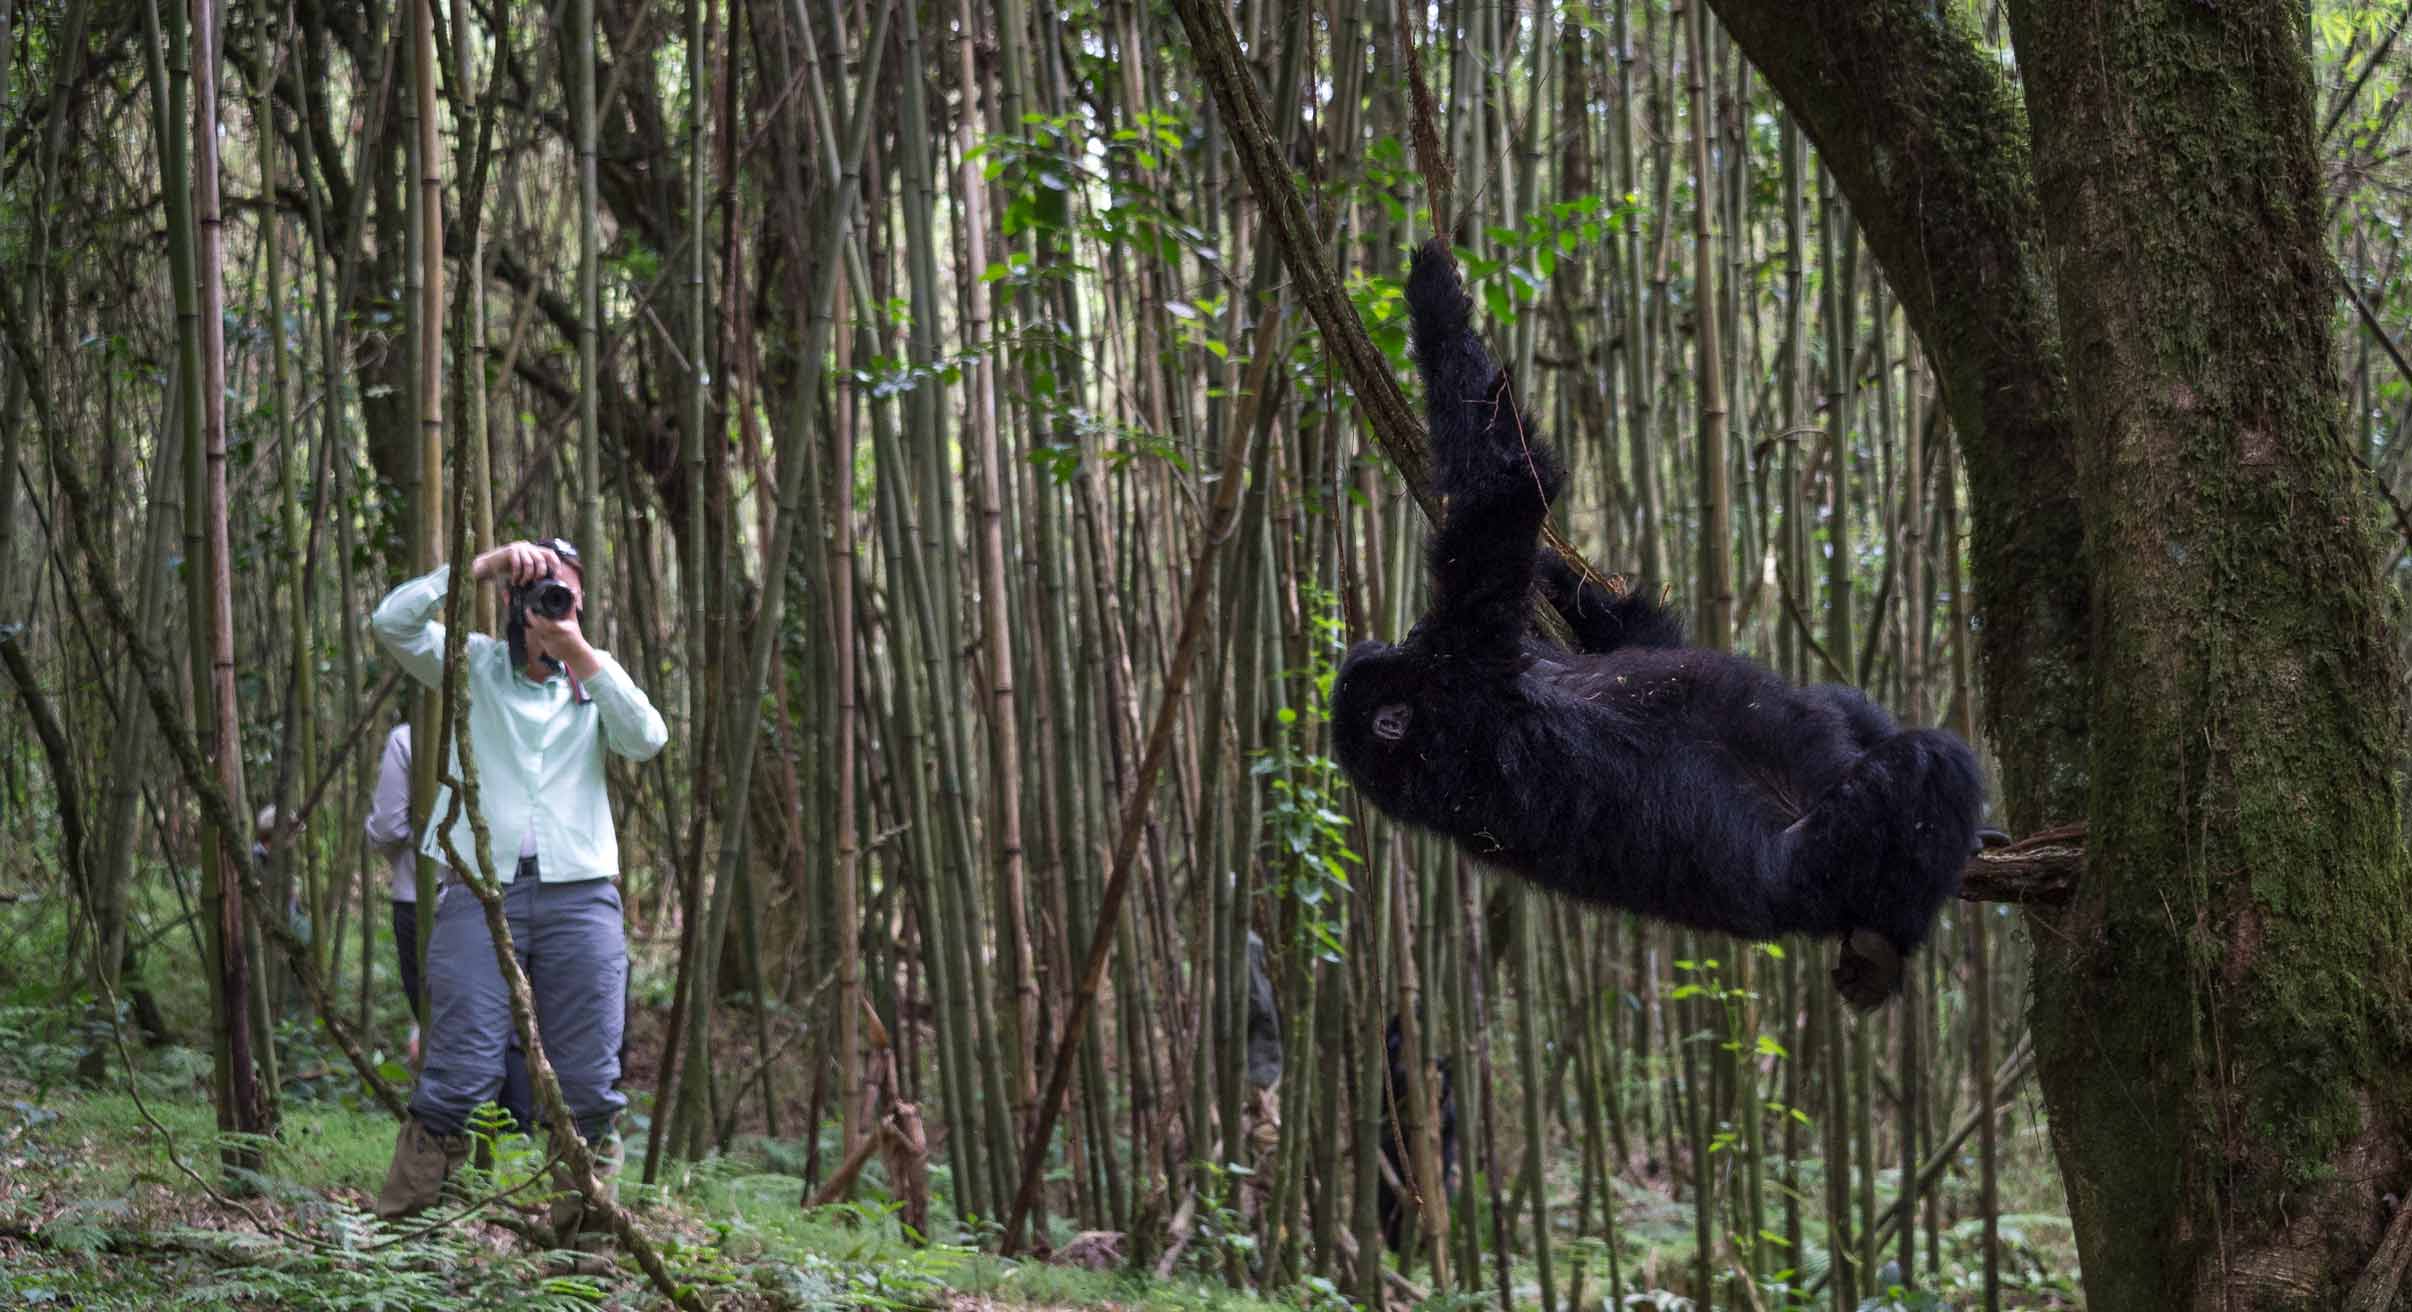 Capturing mountain gorilla swinging from tree on camera in Rwanda